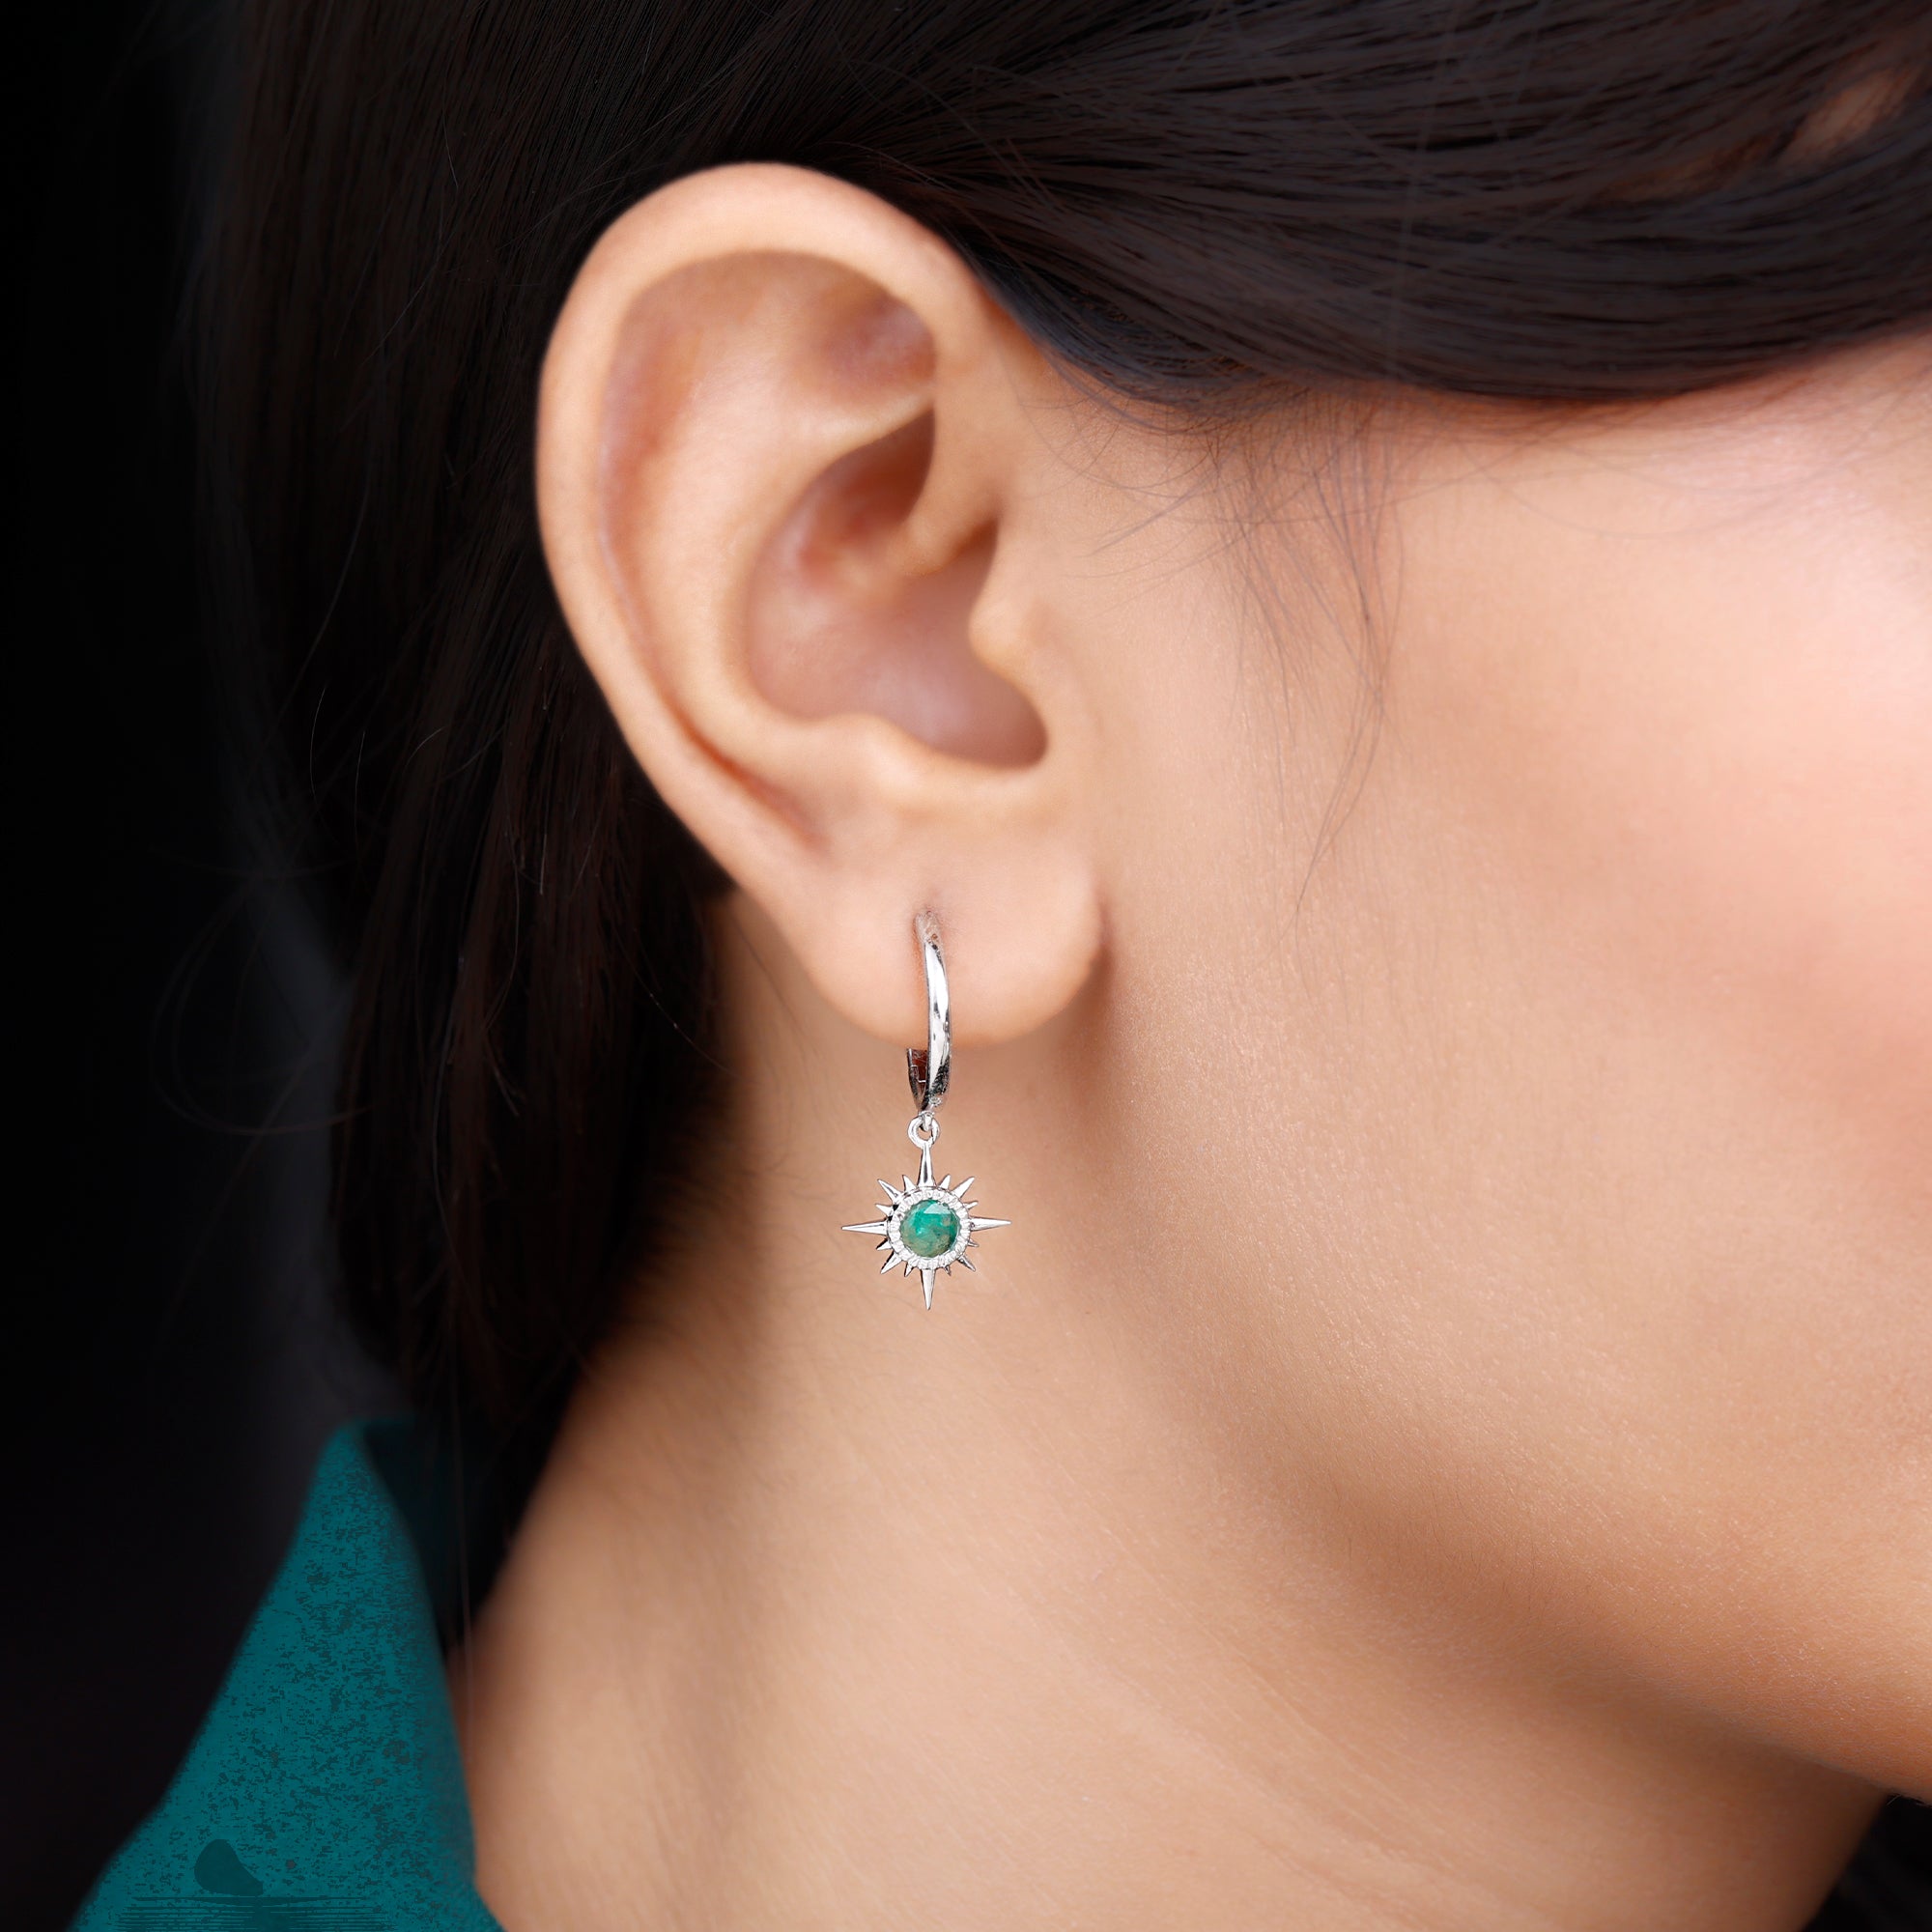 Milgrain Bezel Set Emerald Sunburst Hoop Drop Earrings Emerald - ( AAA ) - Quality - Rosec Jewels